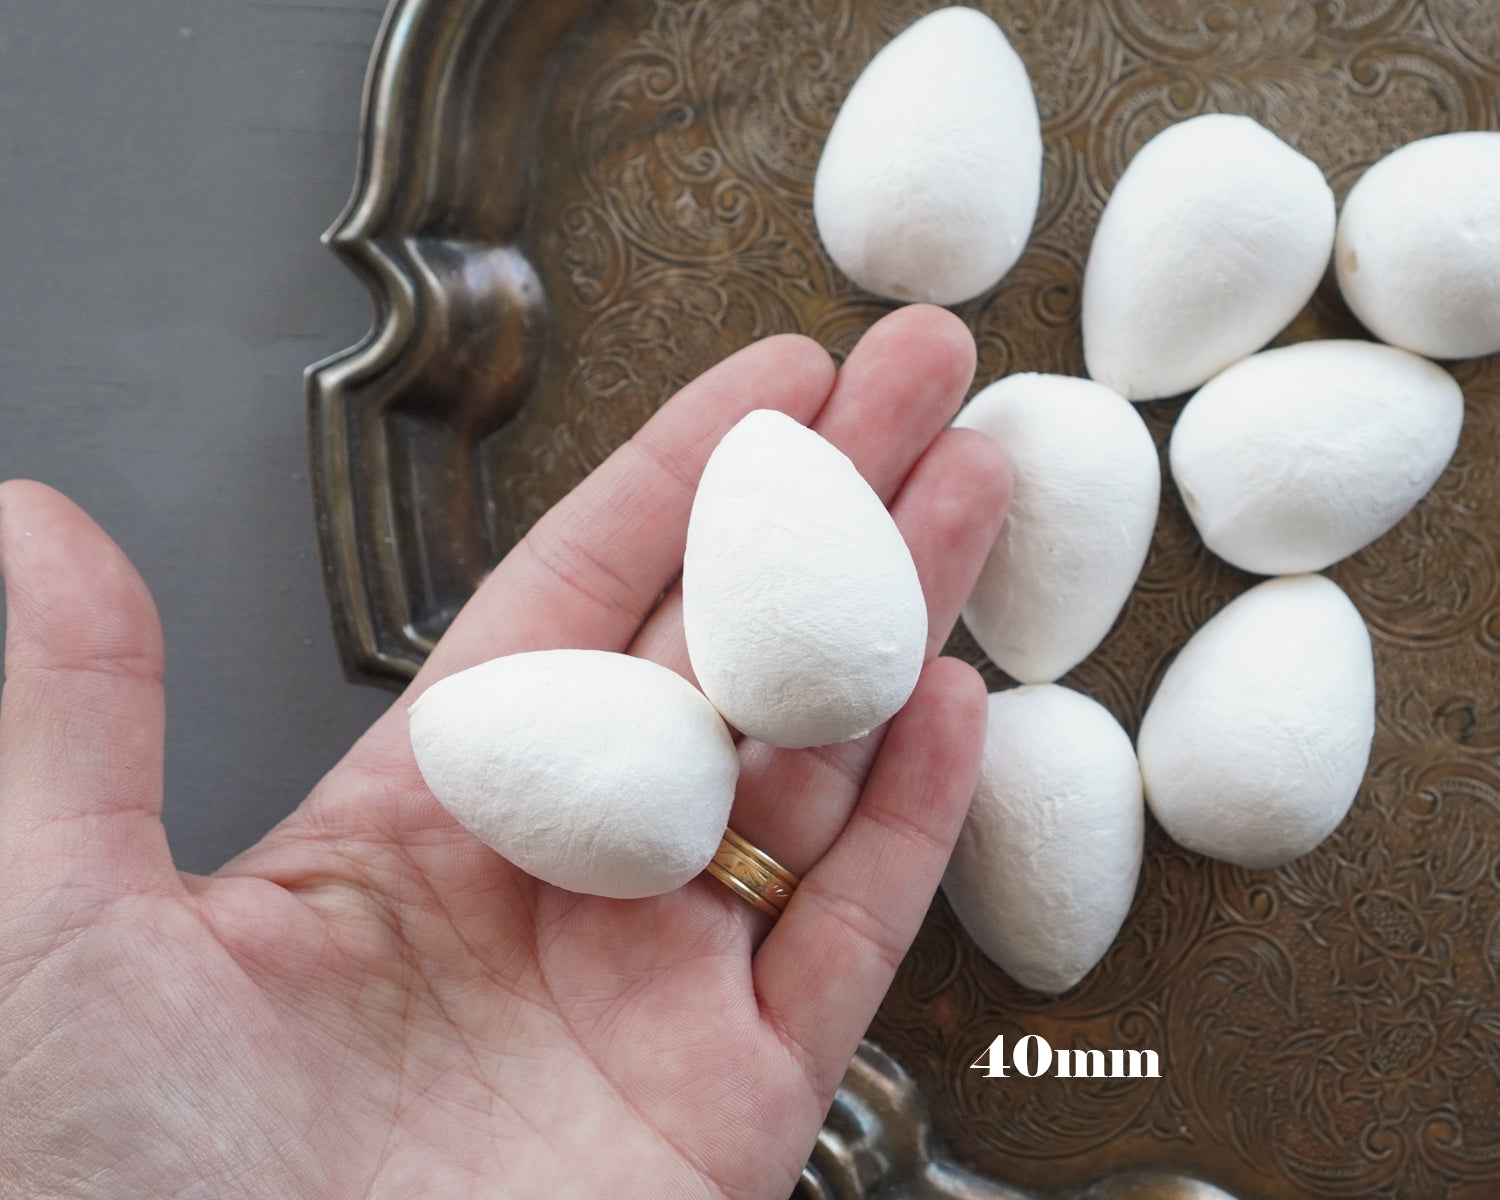 Spun Cotton Eggs for DIY Crafts • Ready to decorate • SPUNNYS